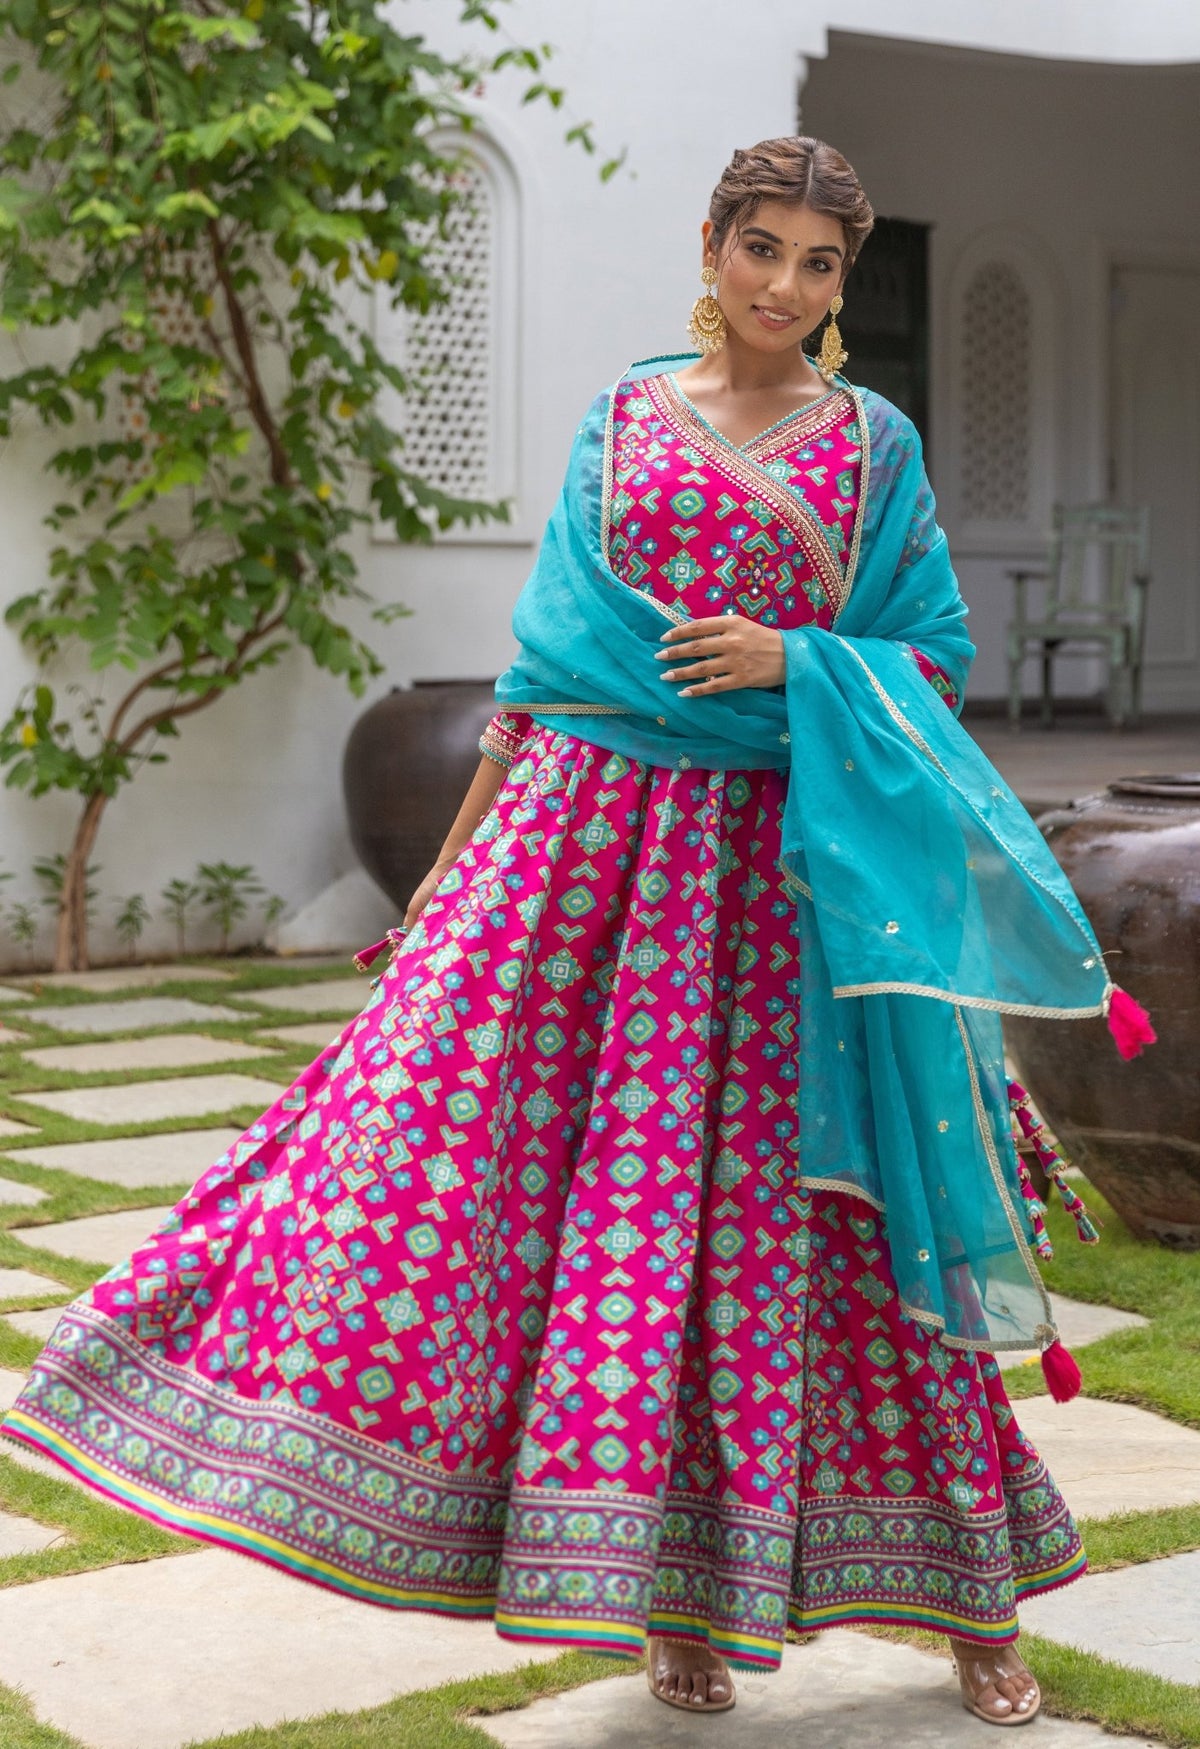 Ethnic Dresses - Shop the Most Trendy and Designer Ethnic Wear with Using -  Tara C Tara